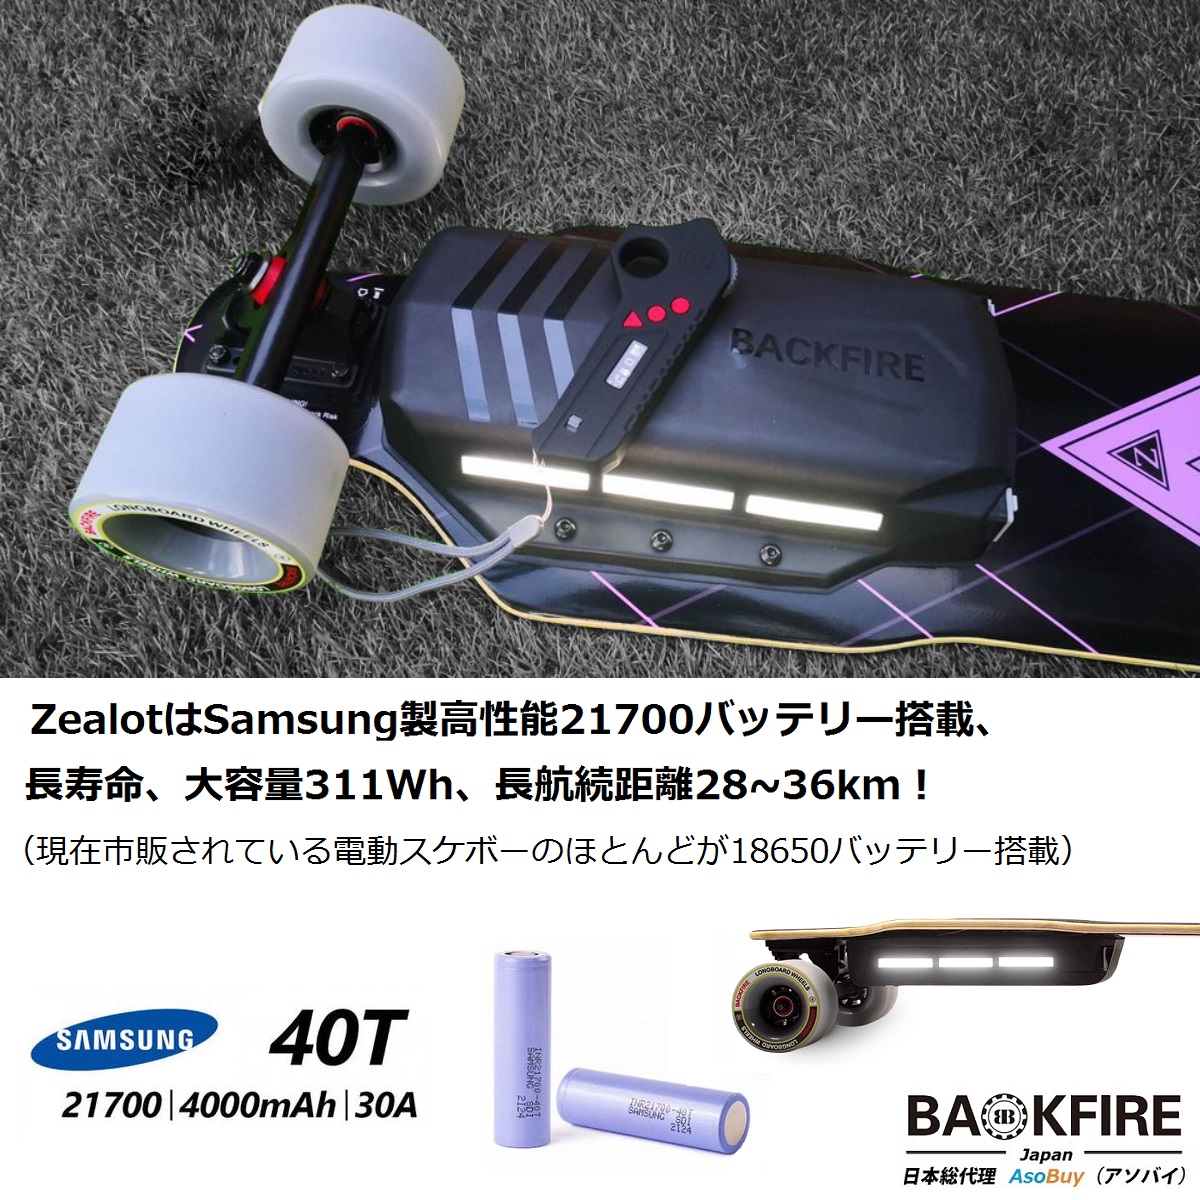 BACKFIRE Zealot （バックファイアー 電動スケートボード ジーロット